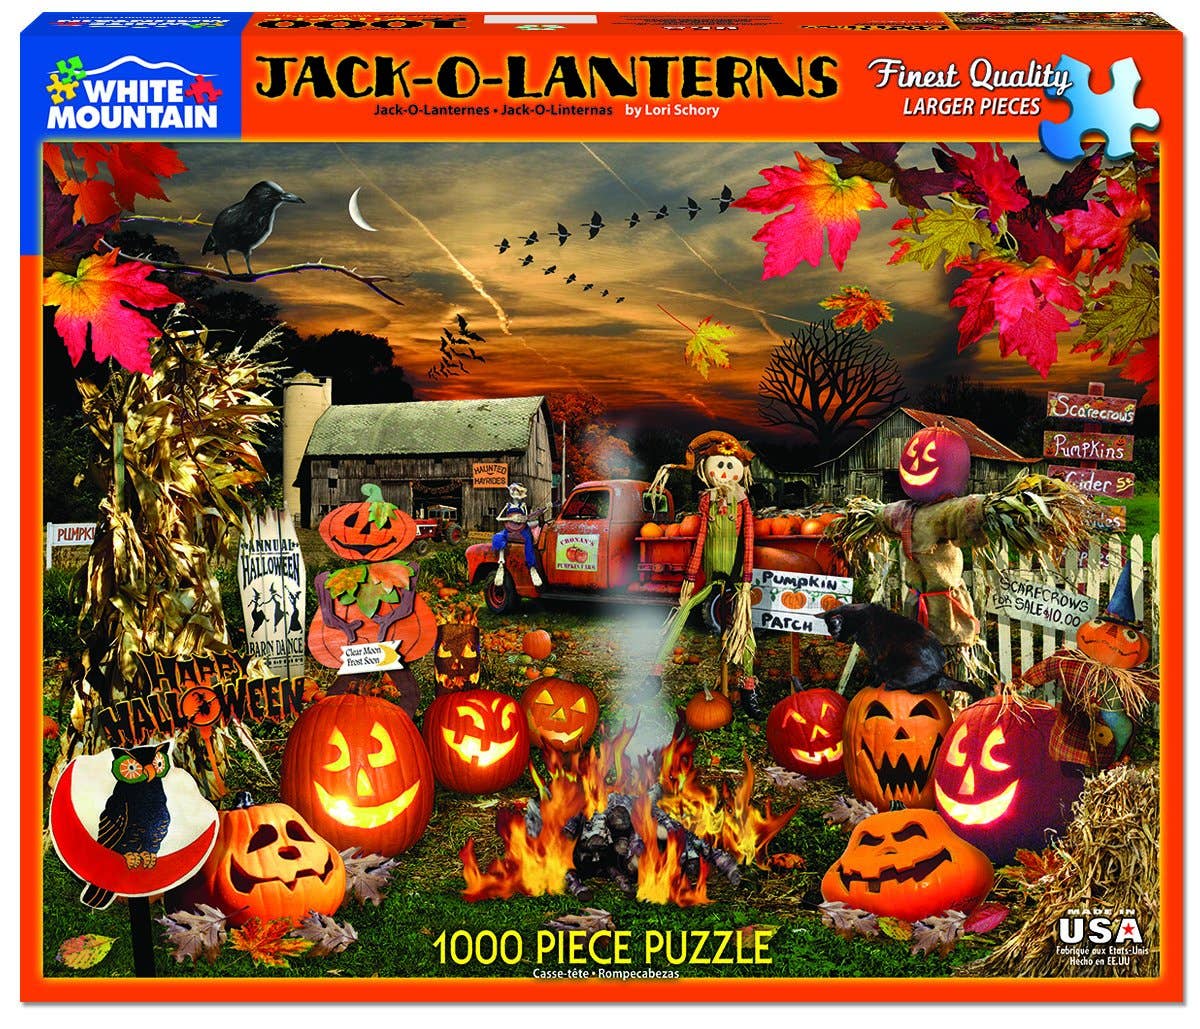 Jack-O-Lantern - 1000 piece Puzzle by White Mountain Puzzles